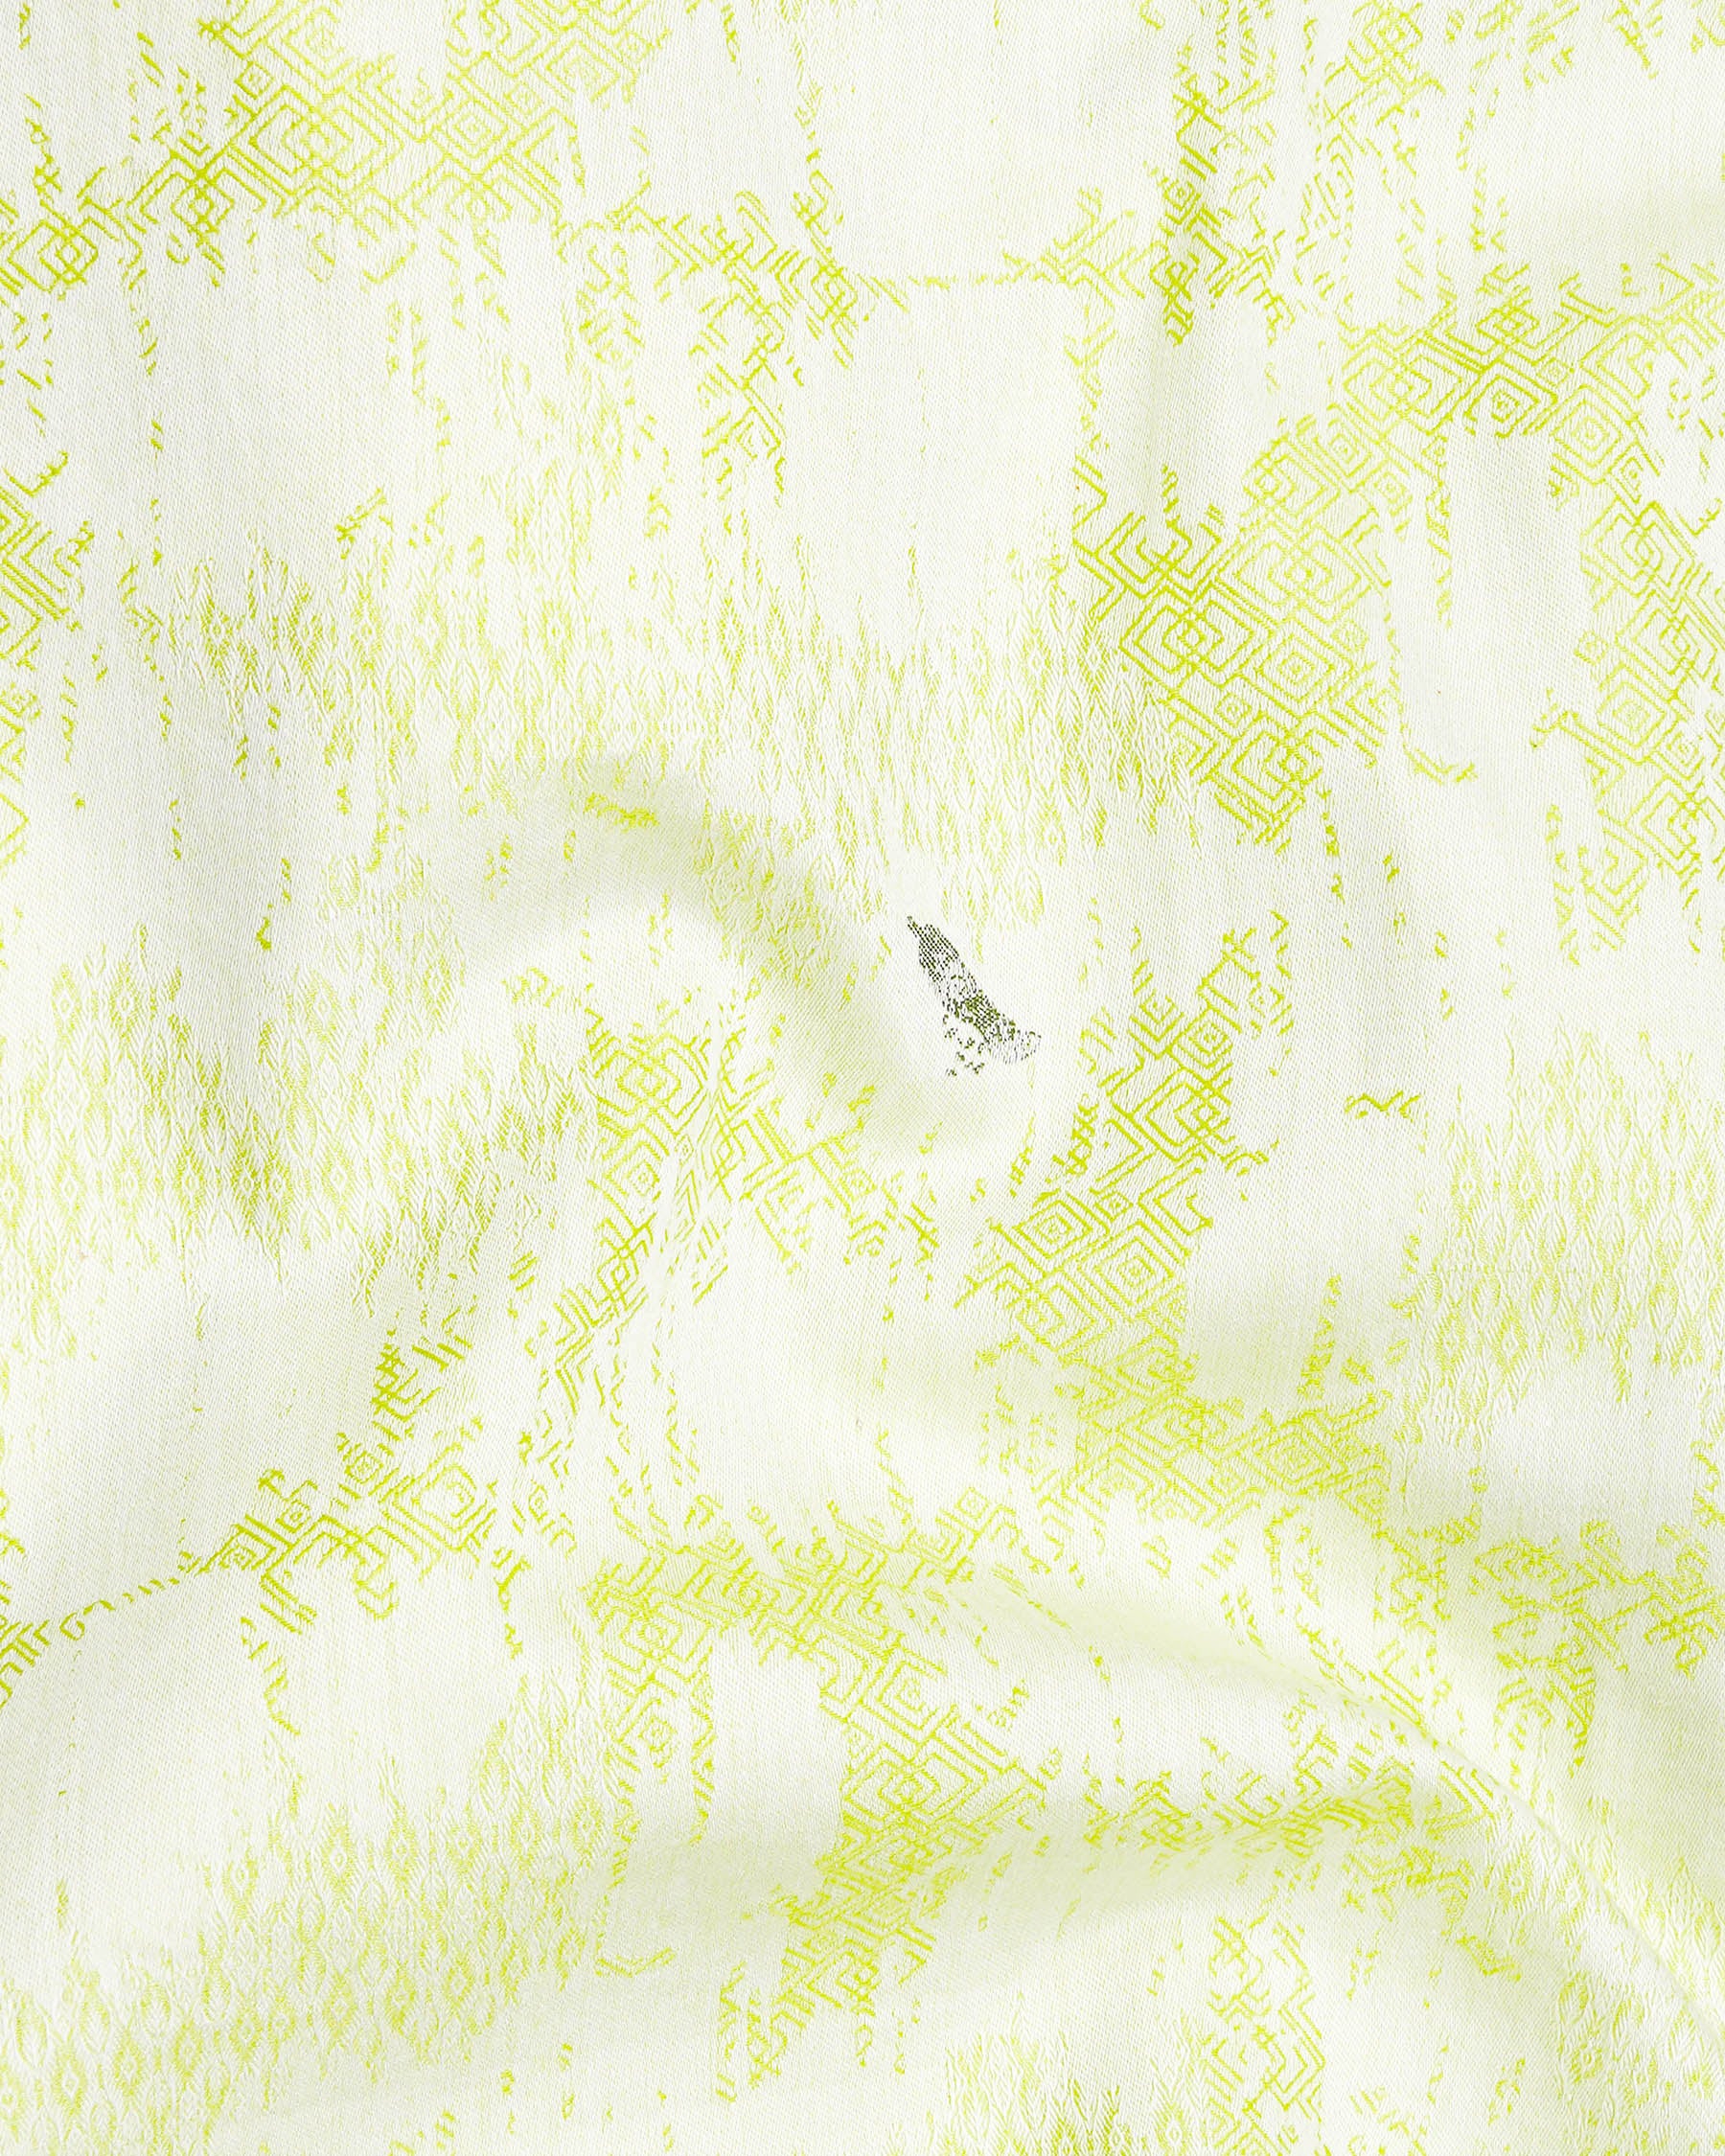 Wattle Mint faded feather Jacquard Textured Premium Giza Cotton Shirt 7549-38,7549-38,7549-39,7549-39,7549-40,7549-40,7549-42,7549-42,7549-44,7549-44,7549-46,7549-46,7549-48,7549-48,7549-50,7549-50,7549-52,7549-52